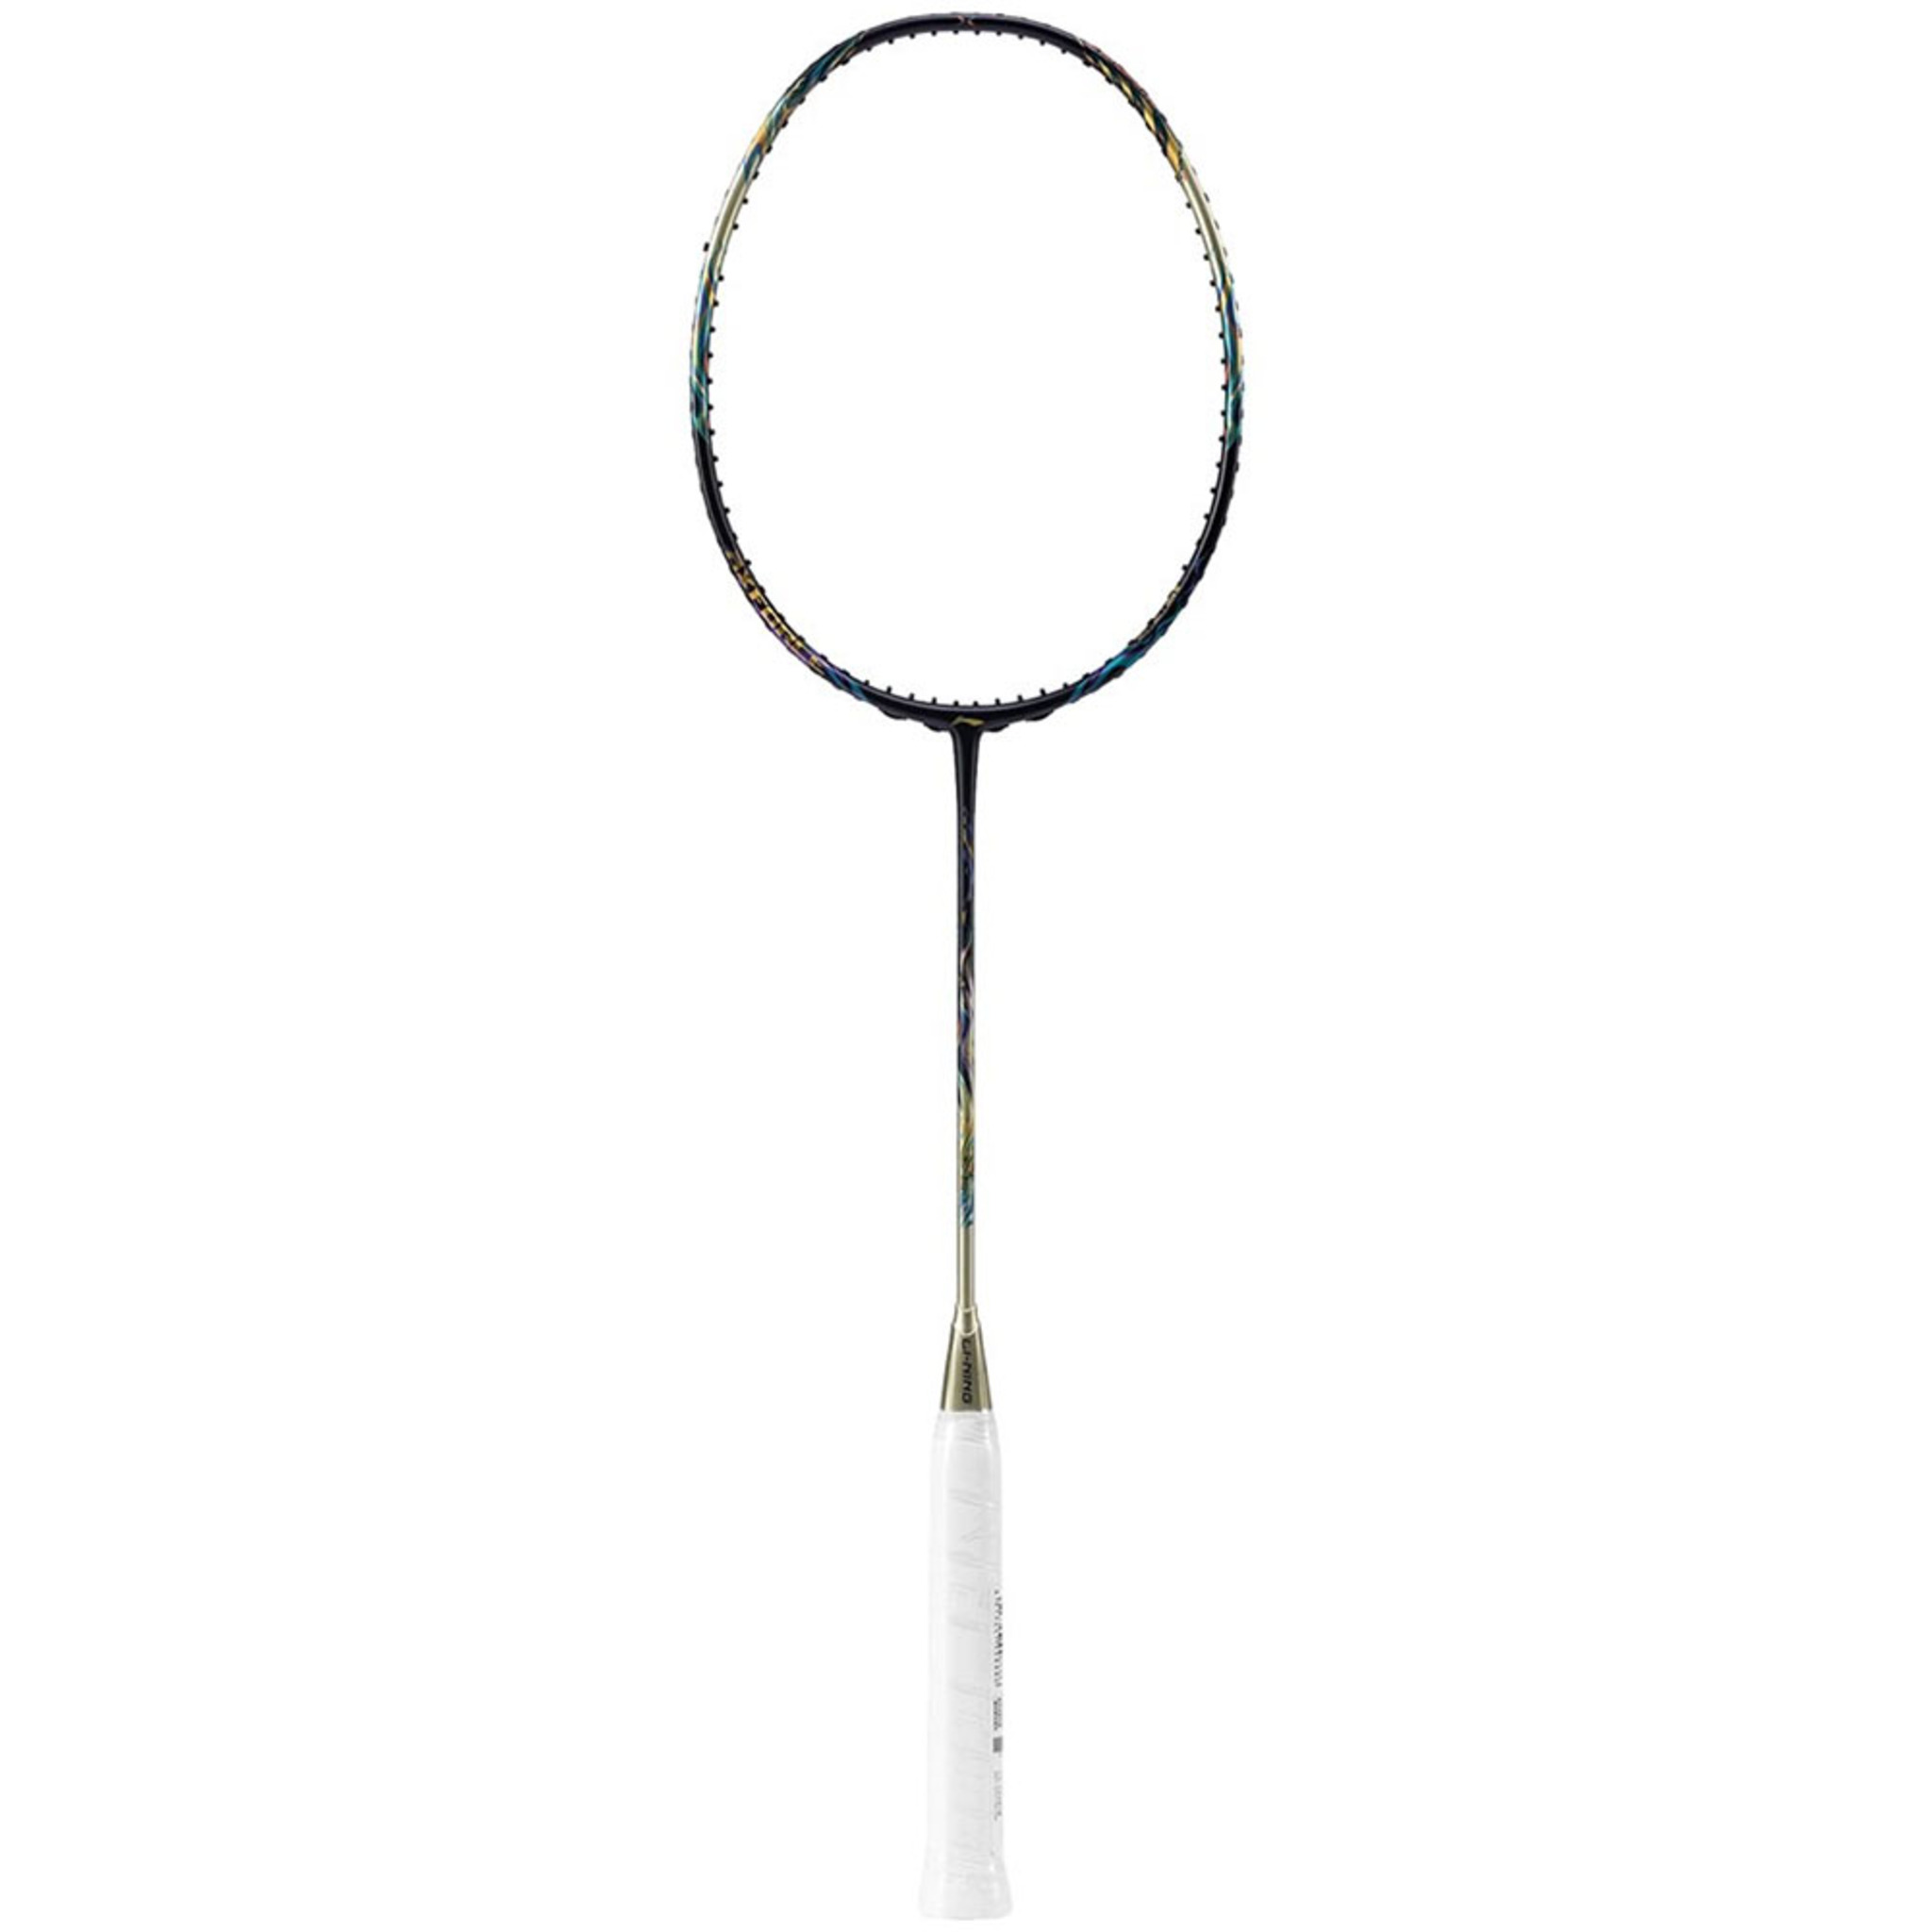 Li-Ning AXFORCE 100 (the kirin) Badminton Racket - Black/Gold